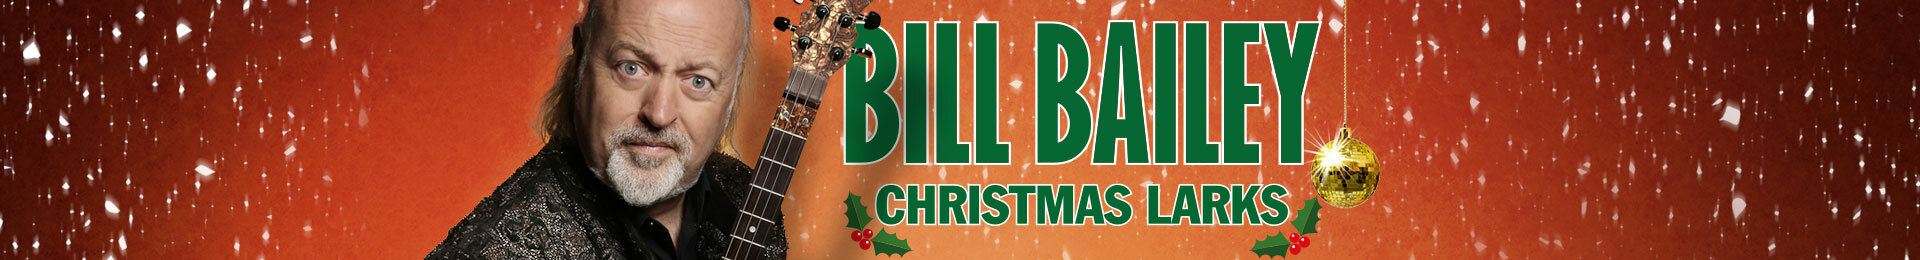 Bill Bailey: Christmas Larks banner image